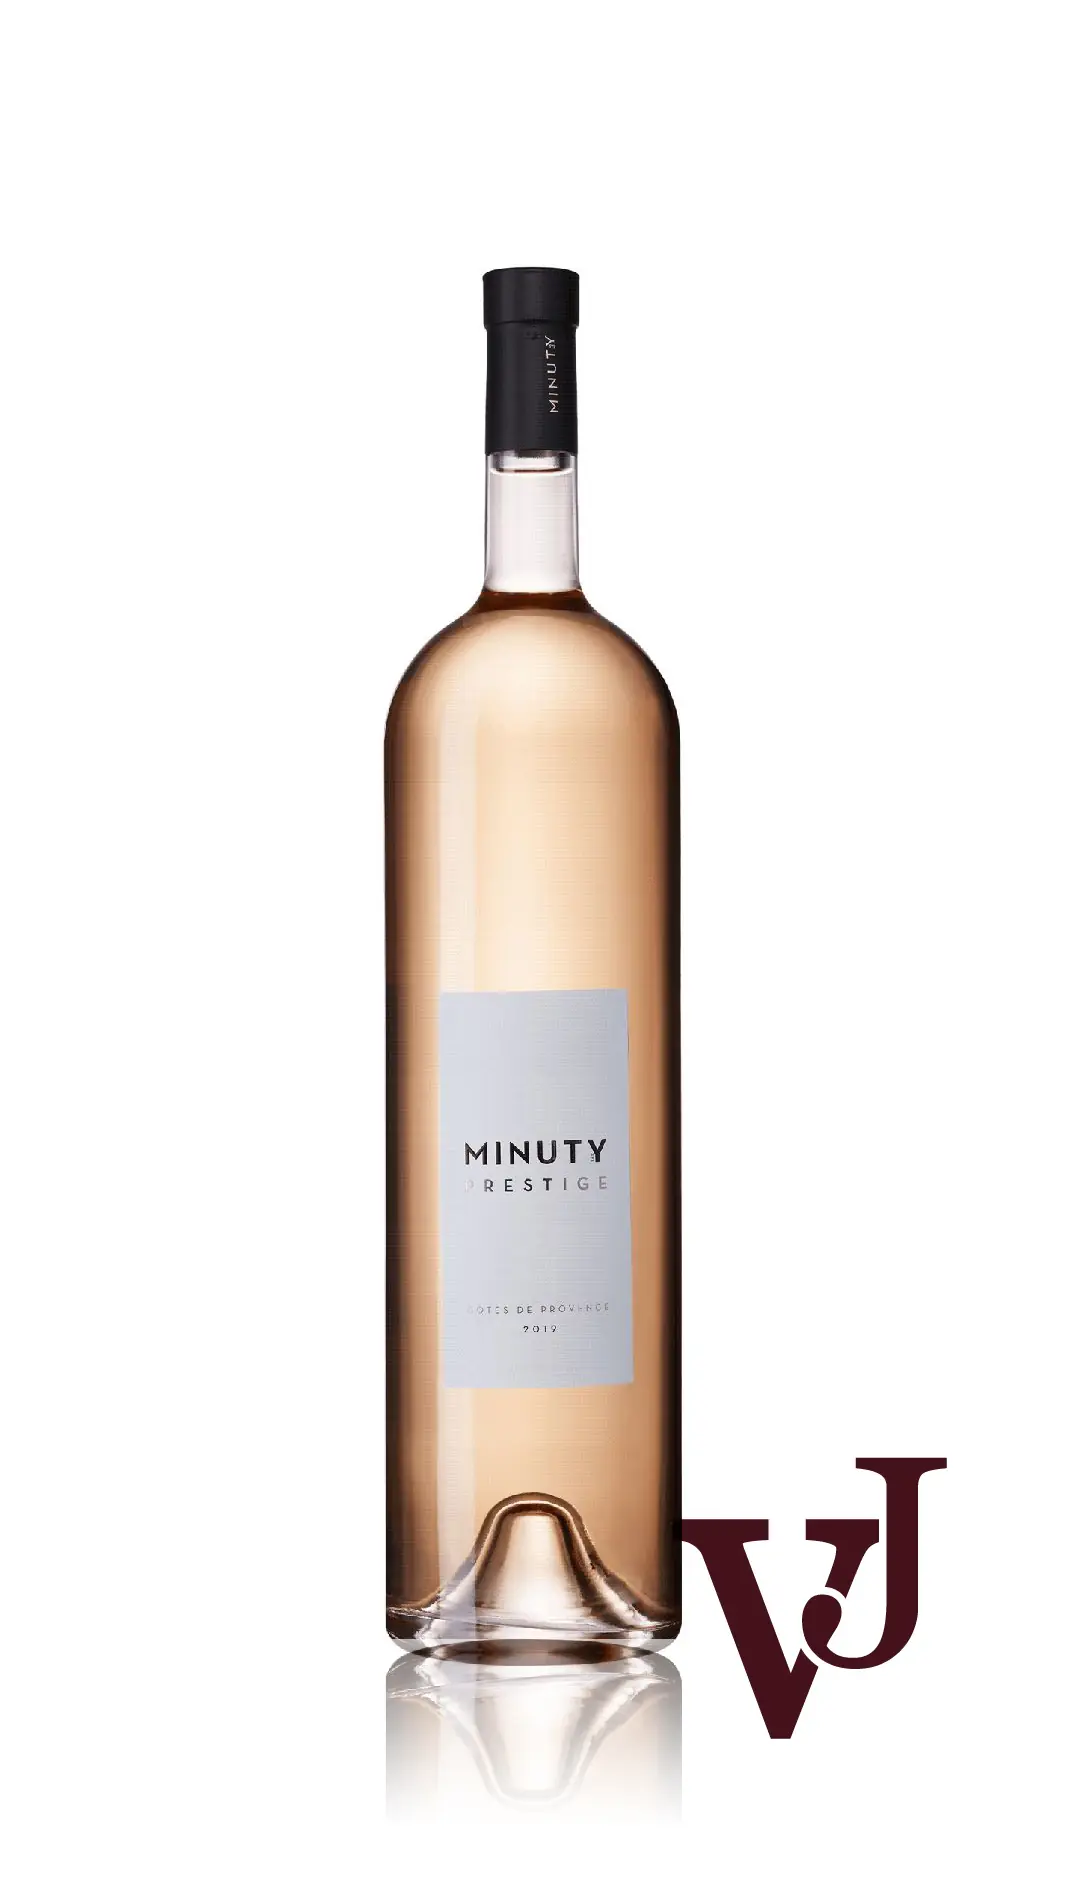 Rosé Vin - Minuty Prestige Rosé artikel nummer 7396408 från producenten Château Minuty från området Frankrike - Vinjournalen.se